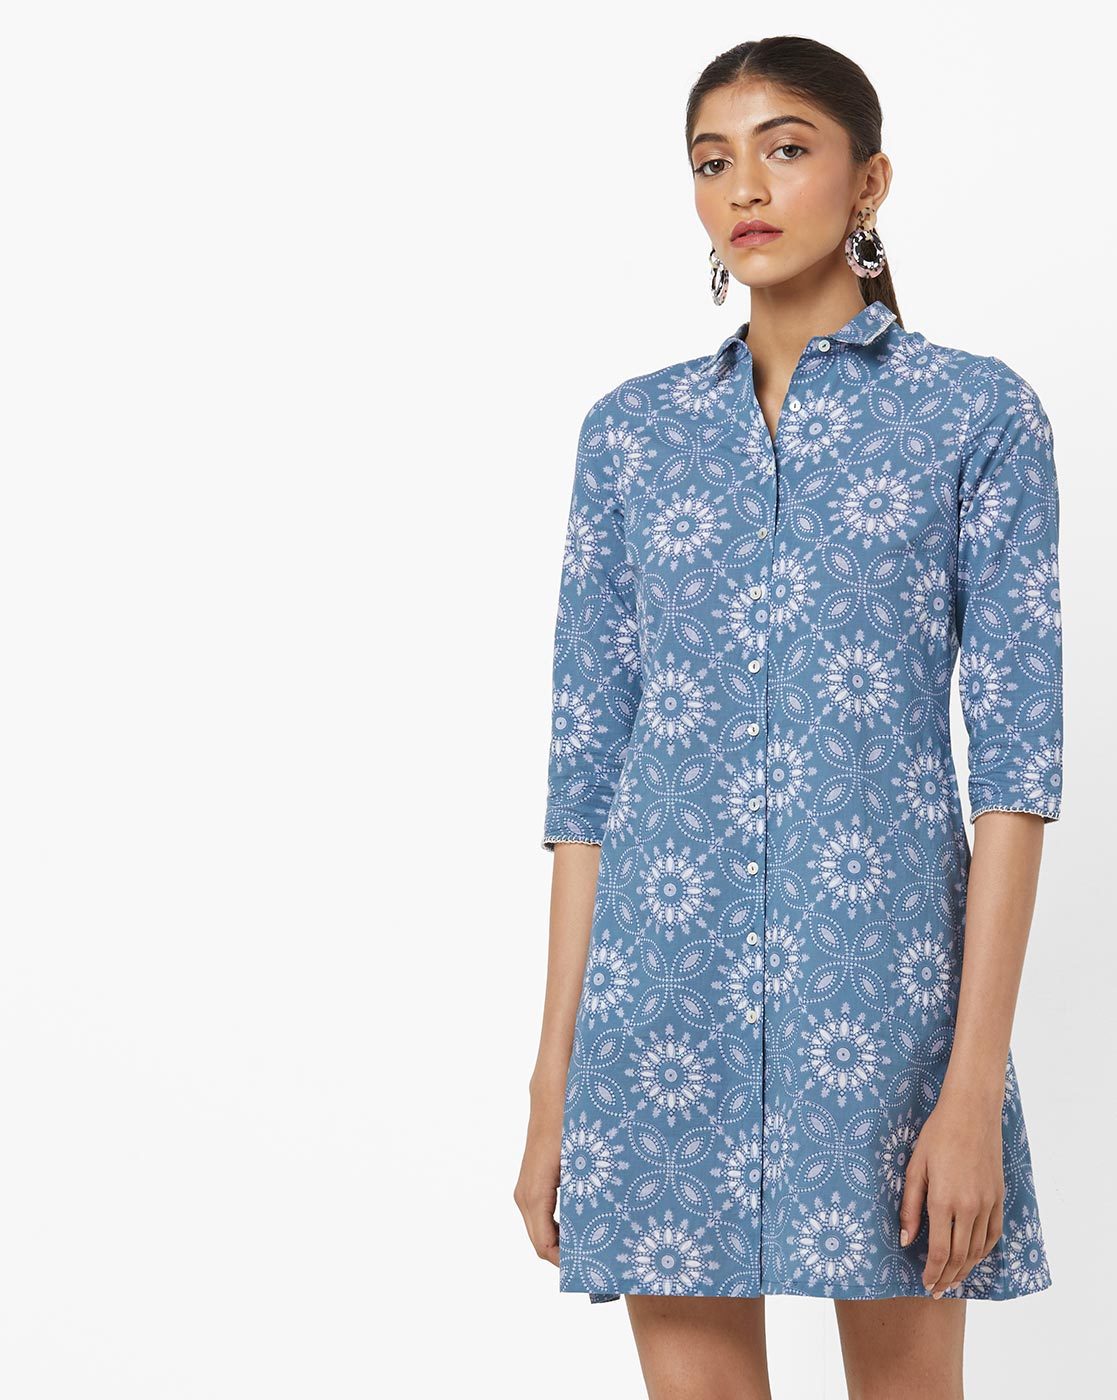 Blue Striped Cotton Shirt Style Kurti #Blue #Striped #Cotton #ShirtStyle # Kurti | Long kurti designs, Shirt style kurti, Kurti designs latest